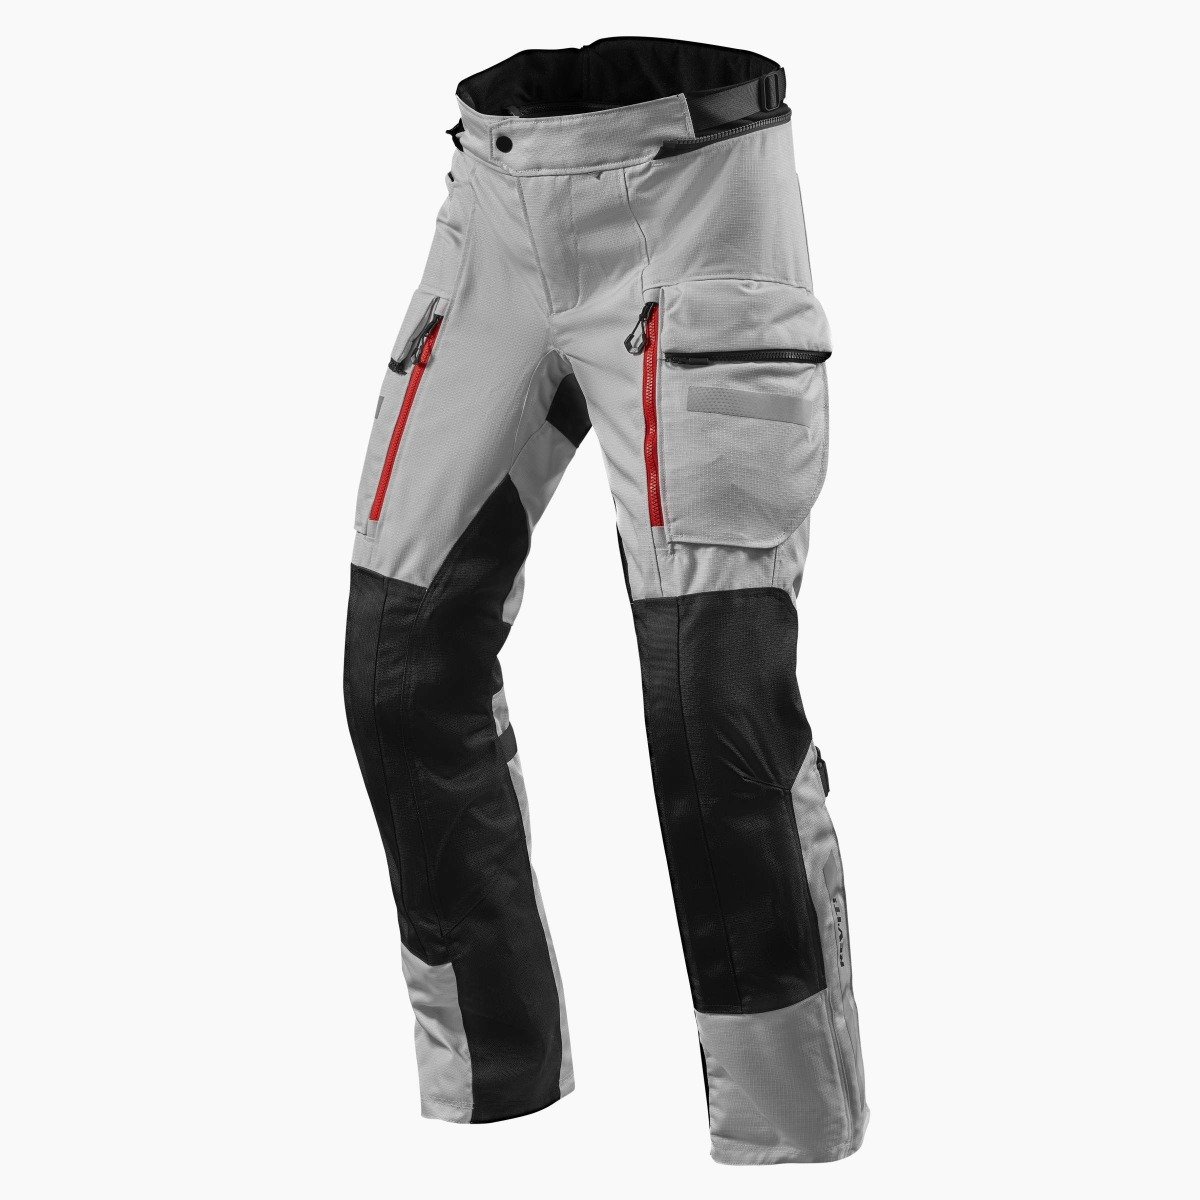 Image of REV'IT! Sand 4 H2O Standard Silver Black Motorcycle Pants Size 2XL EN